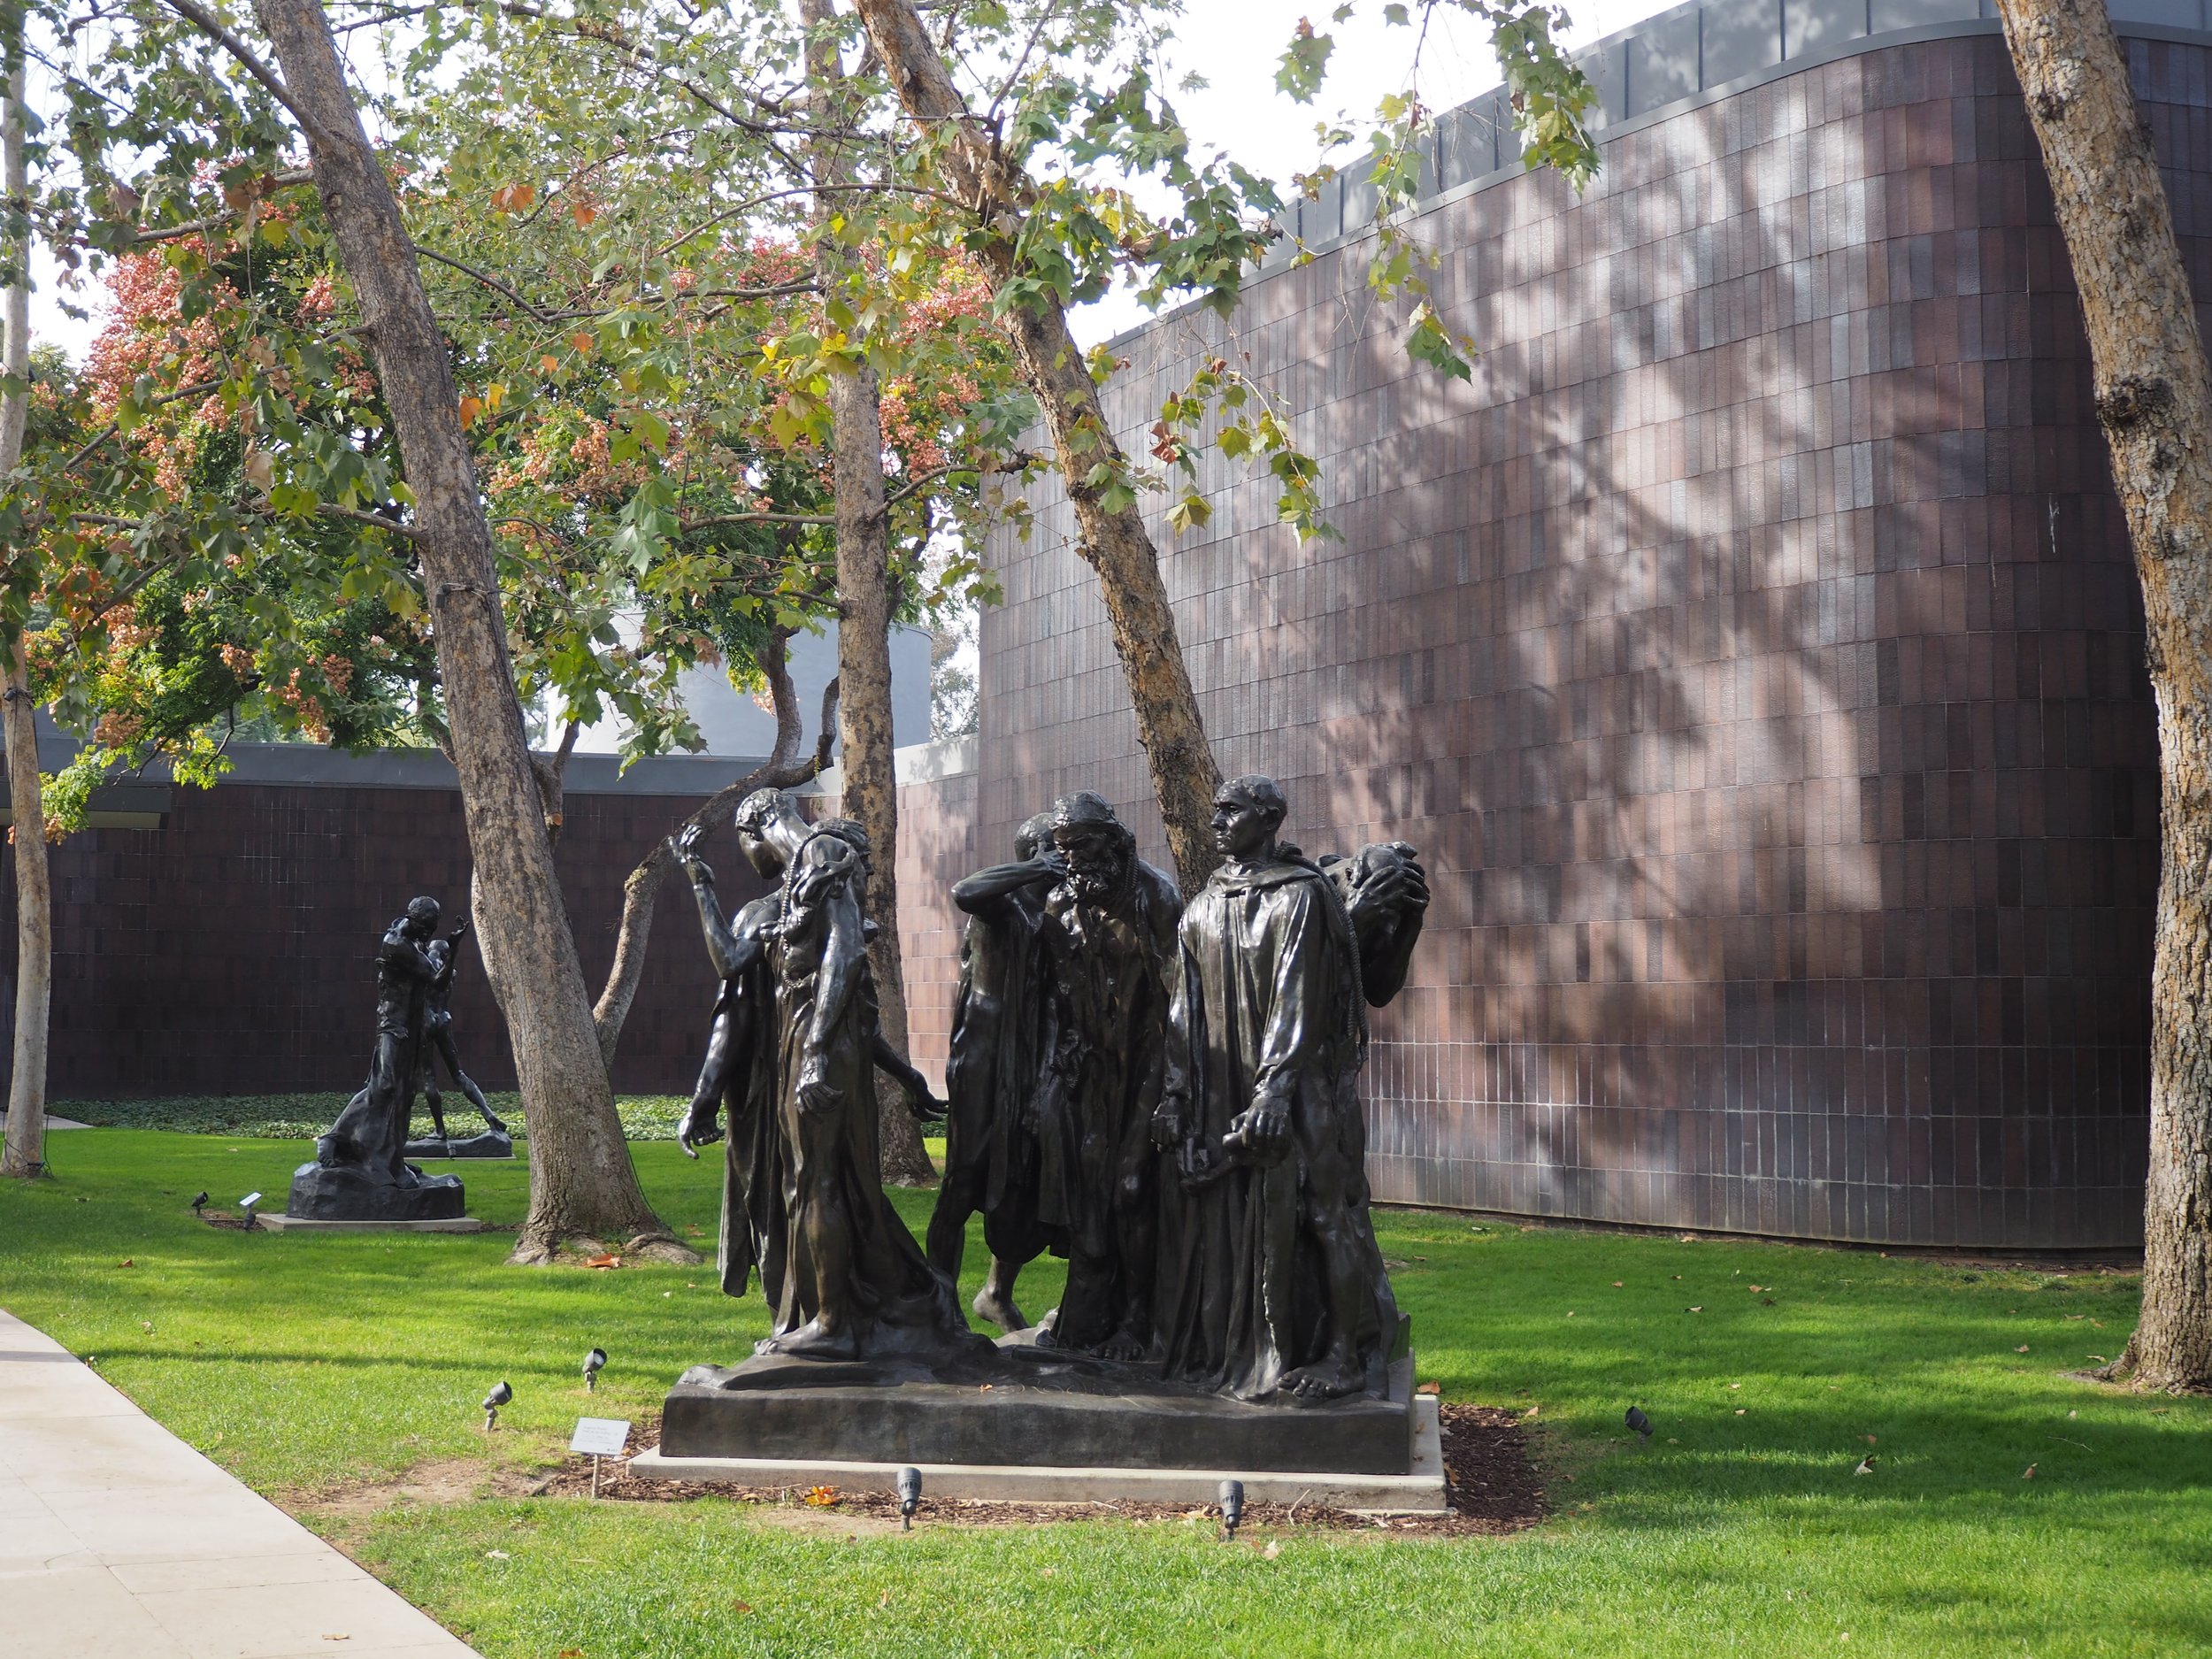  Rodin sculpture outside entrance to Norton Simon Museum. Image courtesy of Rika Nikikura 